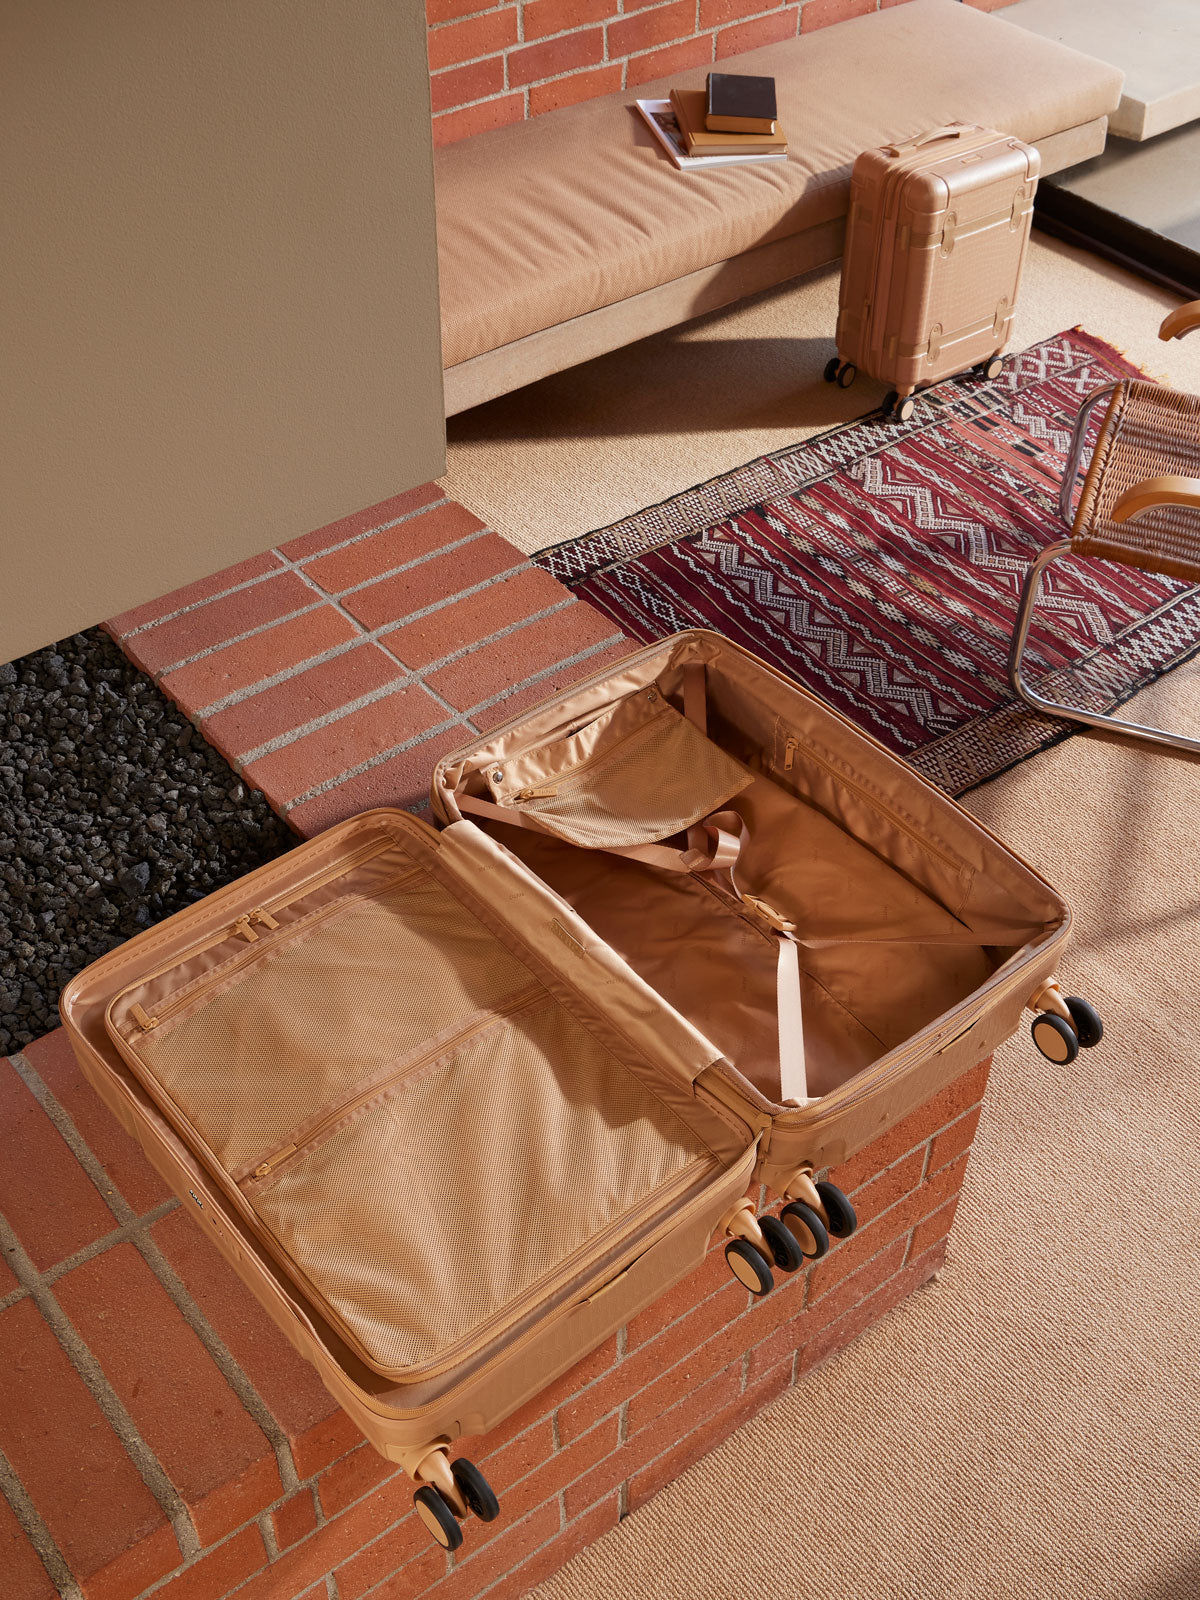 CALPAK TRNK Medium Luggage in TRNK Almond | 24